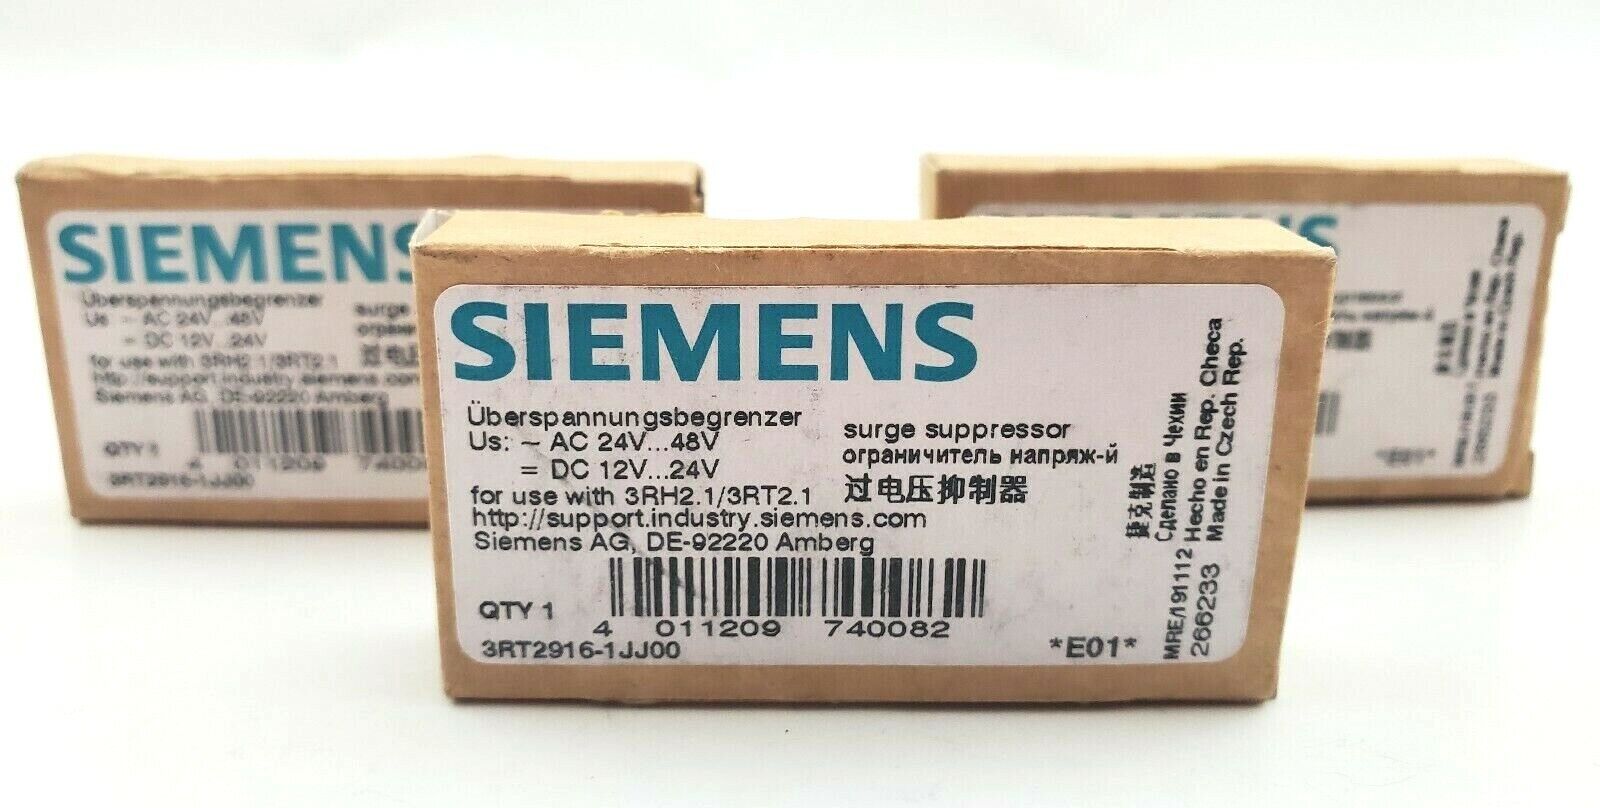 Lot of 3 Siemens 3RT2916-1JJ00 Surge Suppressors DC 12V-24V AC 24V-48V Siemens 3RT2916-1JJ00